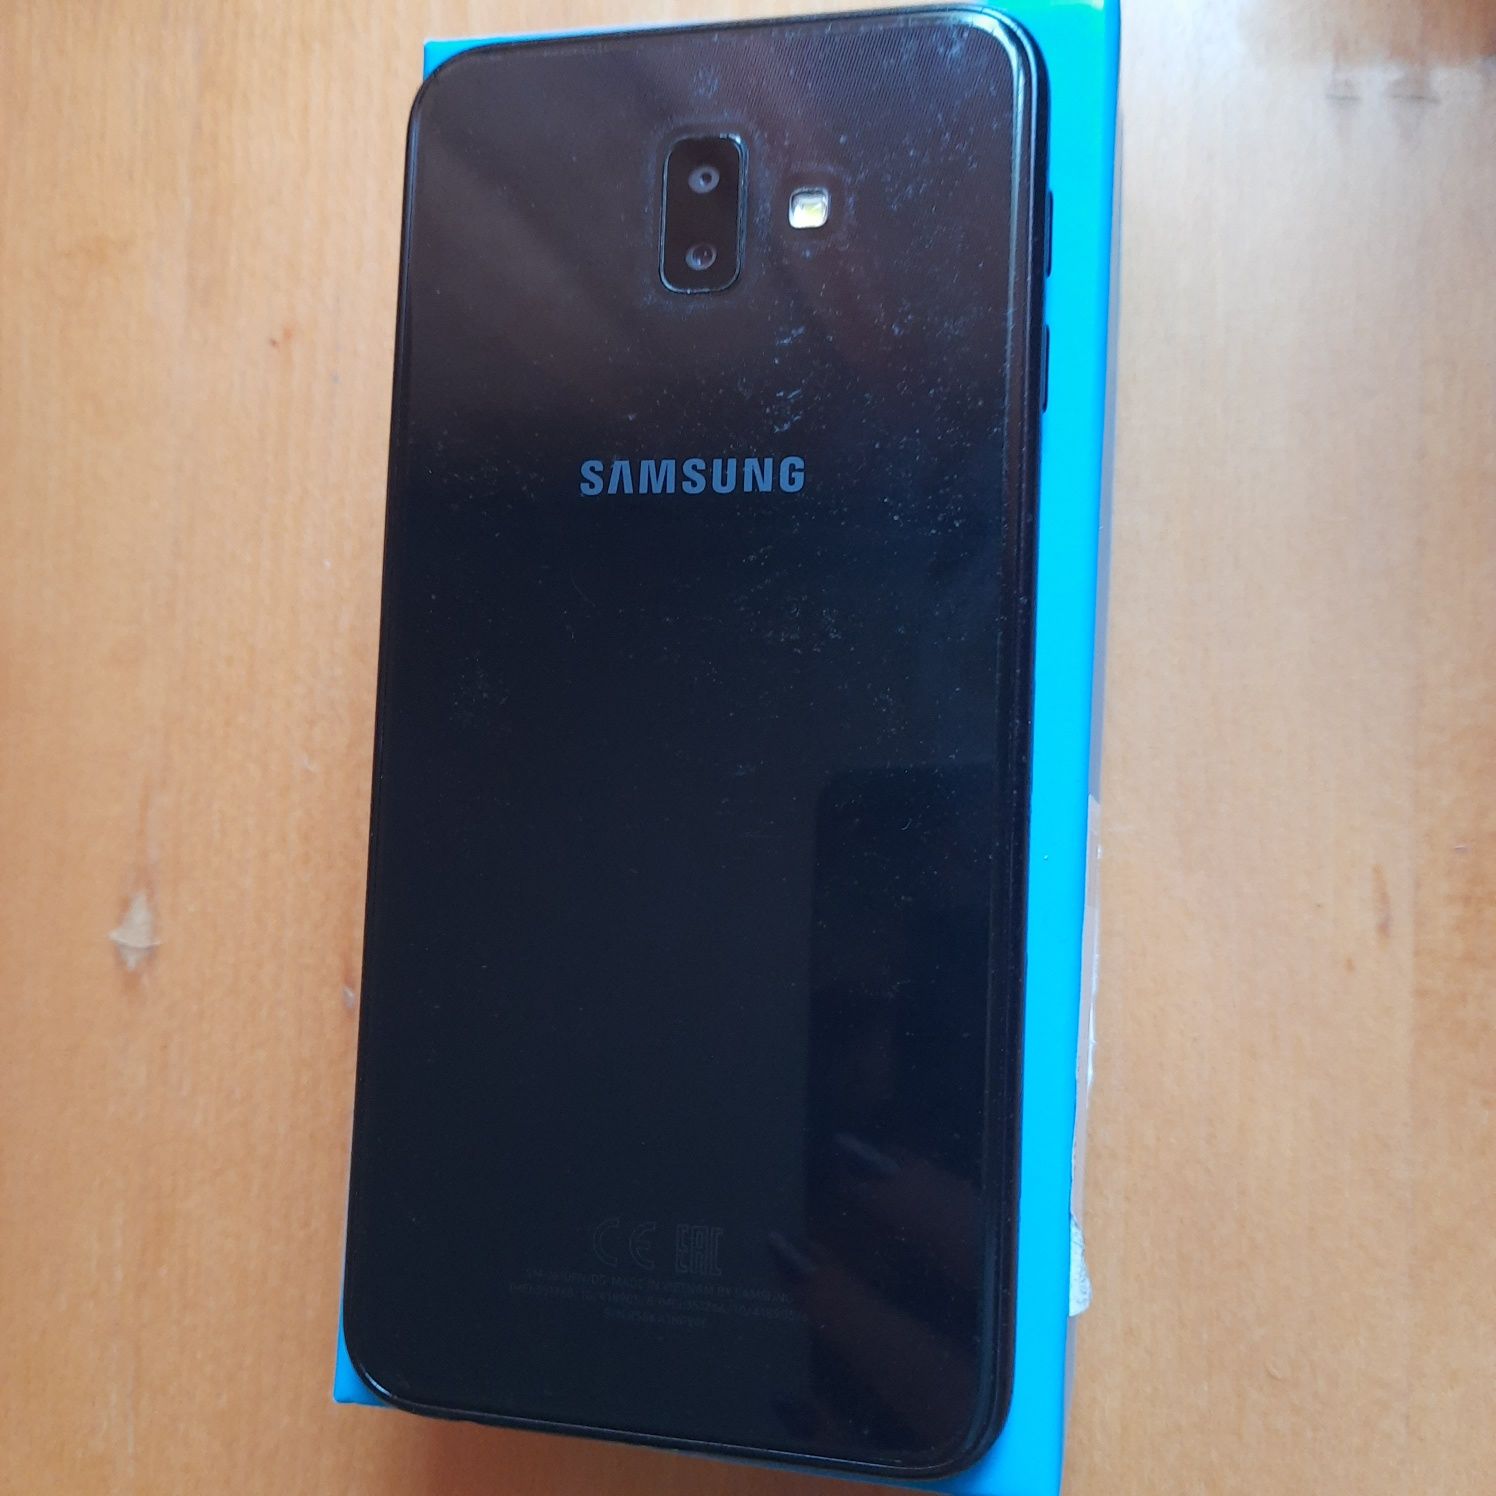 Samsung Galaxy J6+ (SM-J610FN/DS)